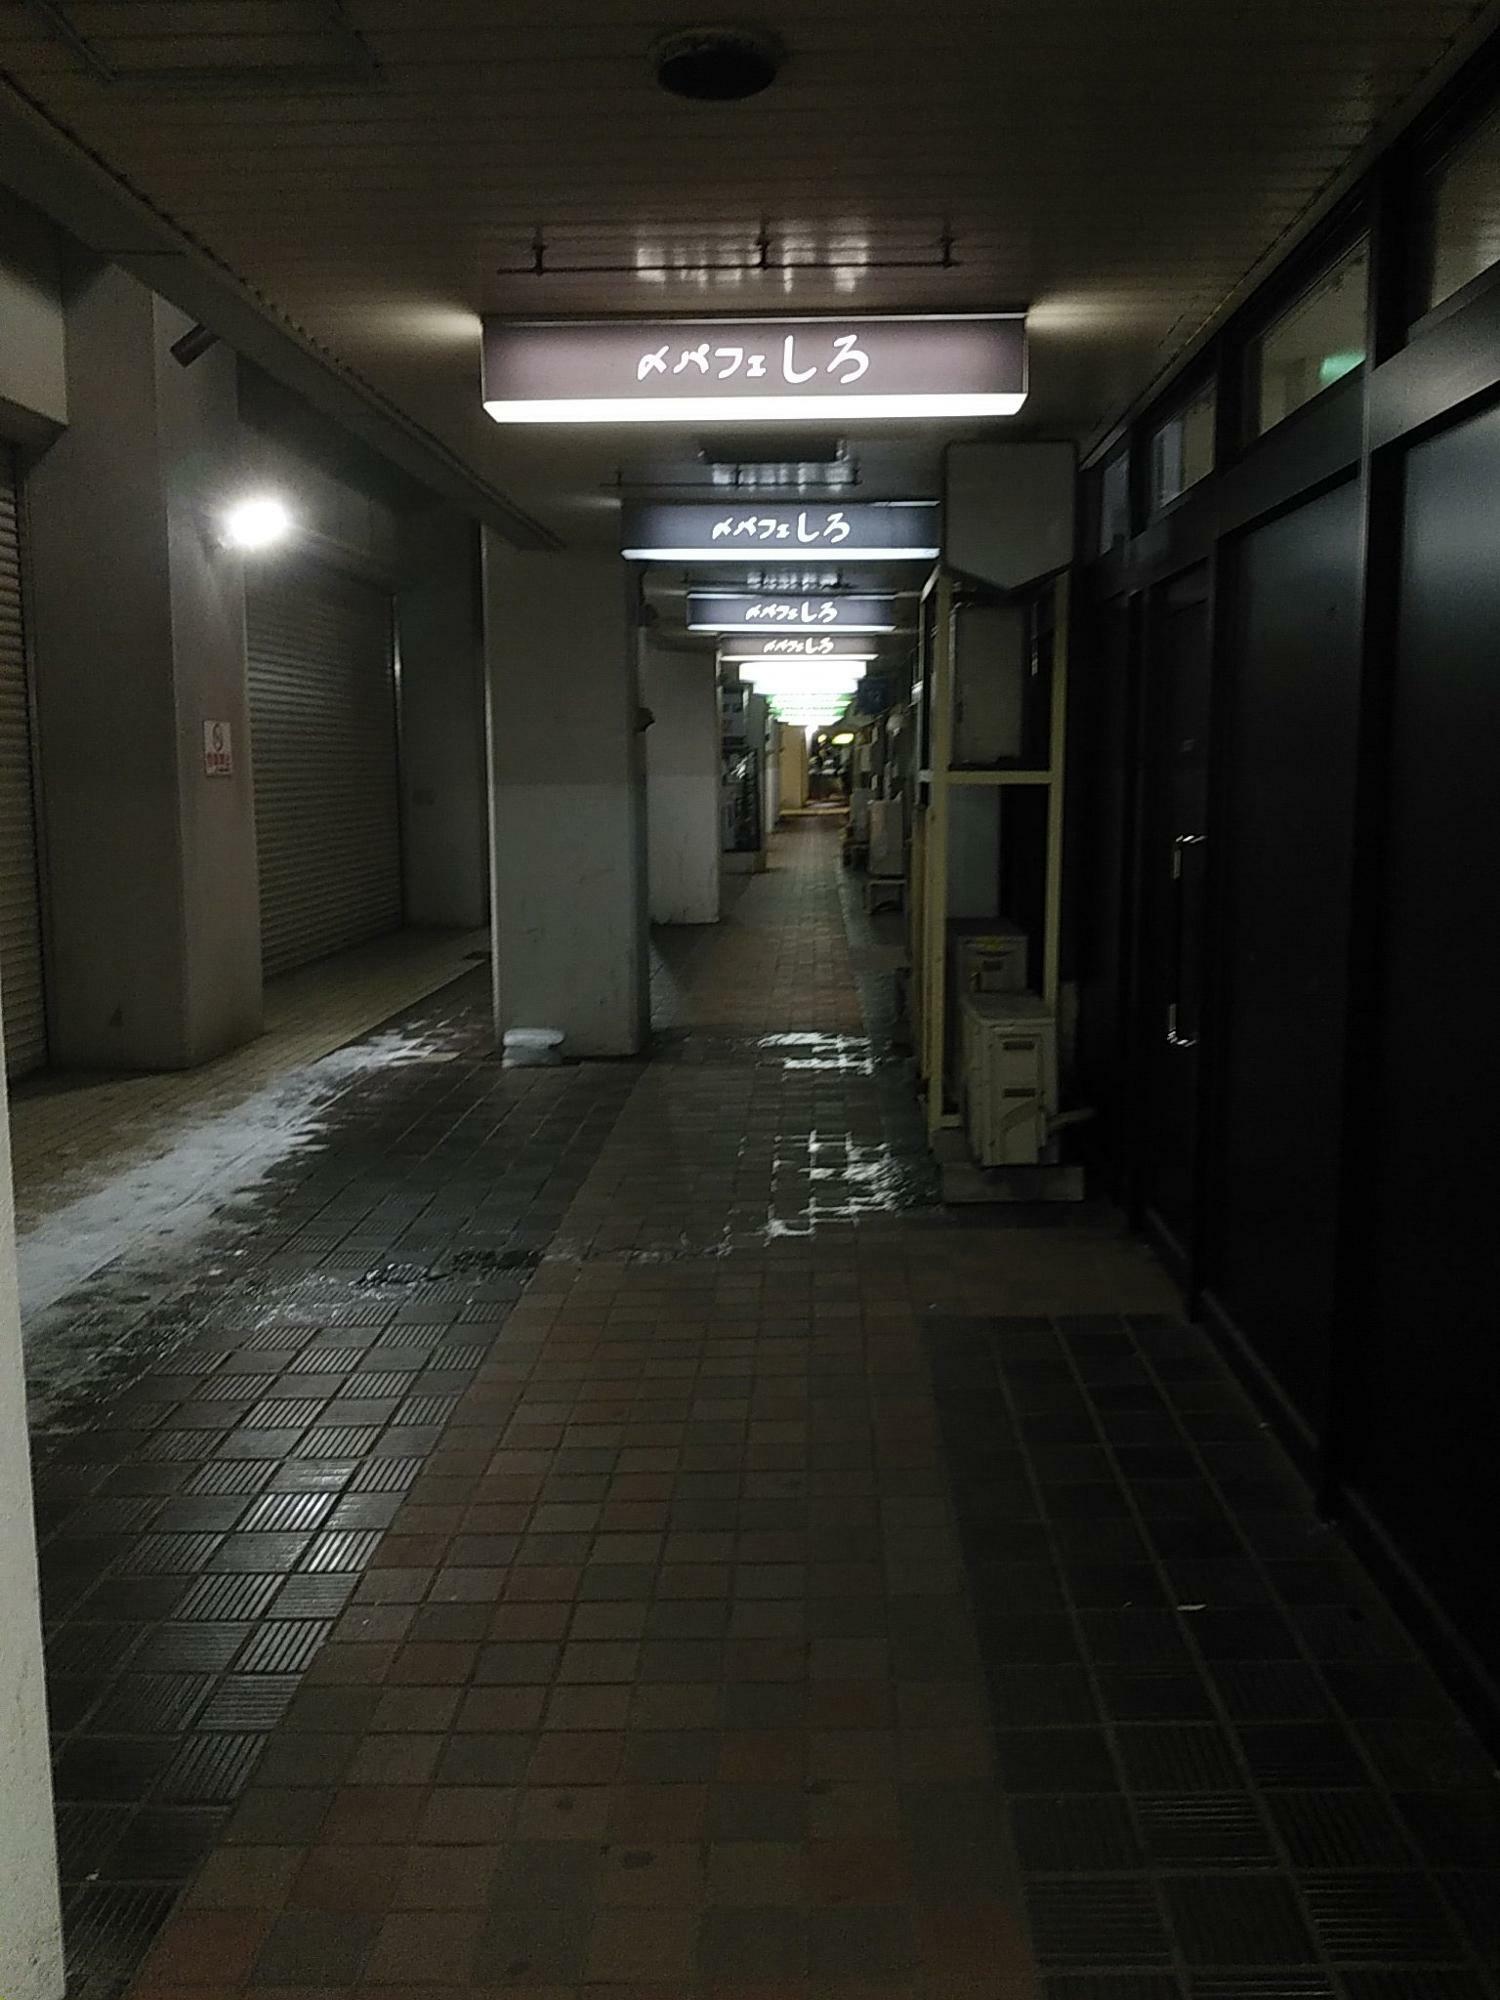 JR新札幌駅の高架下は、新札幌名店街1号館から3号館まで連なっています